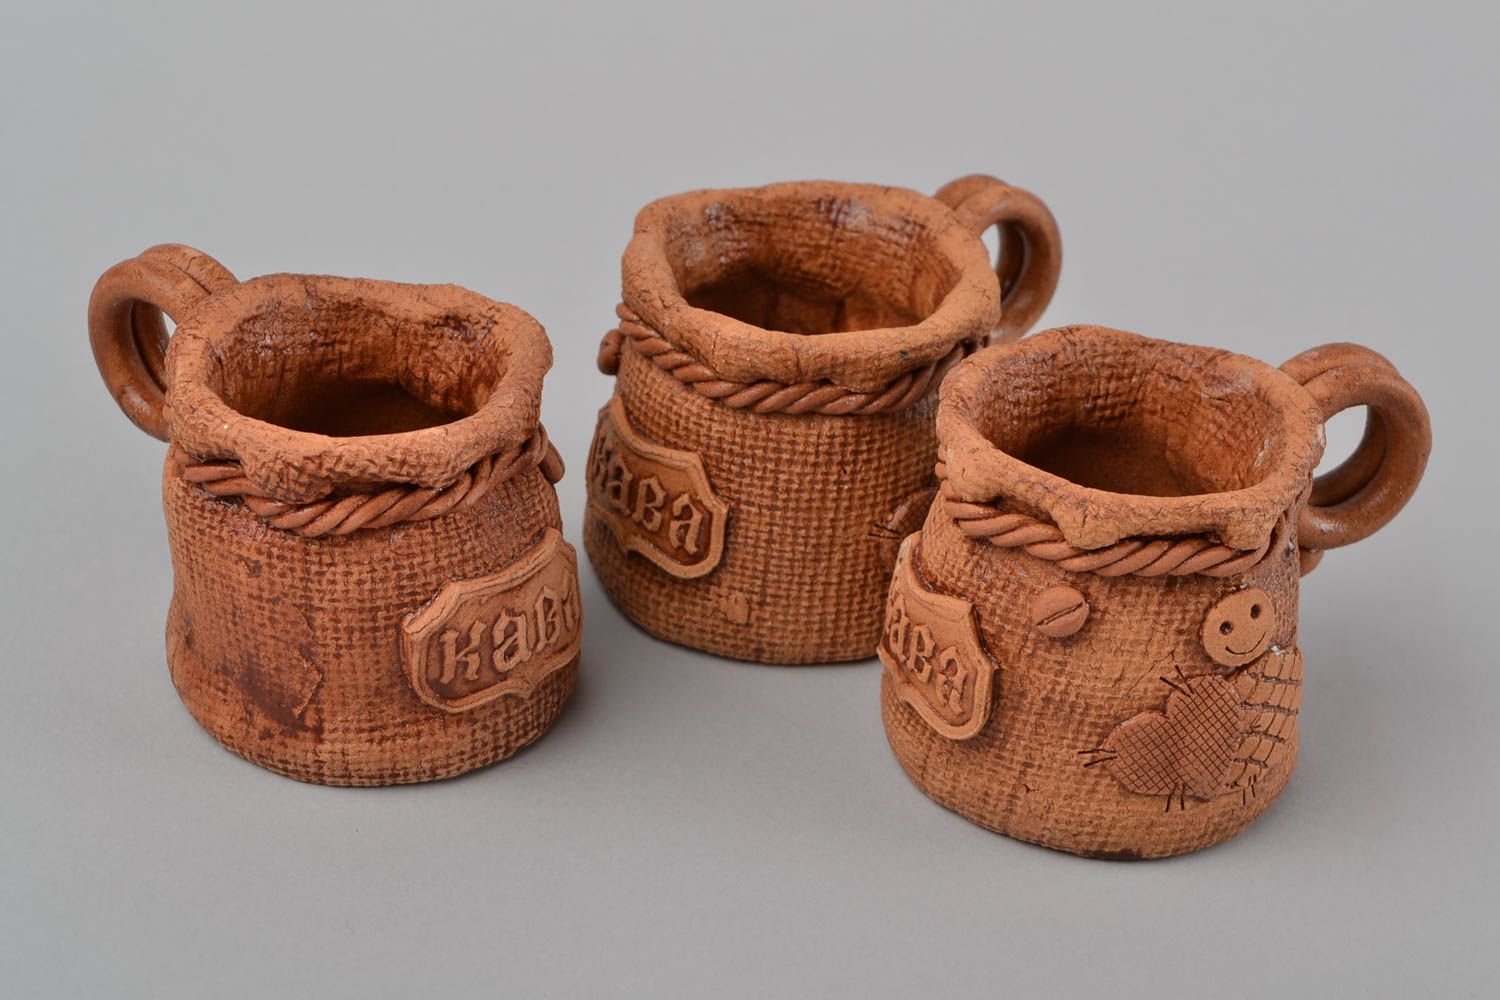  Clay brow decorative pottery set in 7 pieces - three espresso cups, coffee turk, sugar, and salt jars photo 3